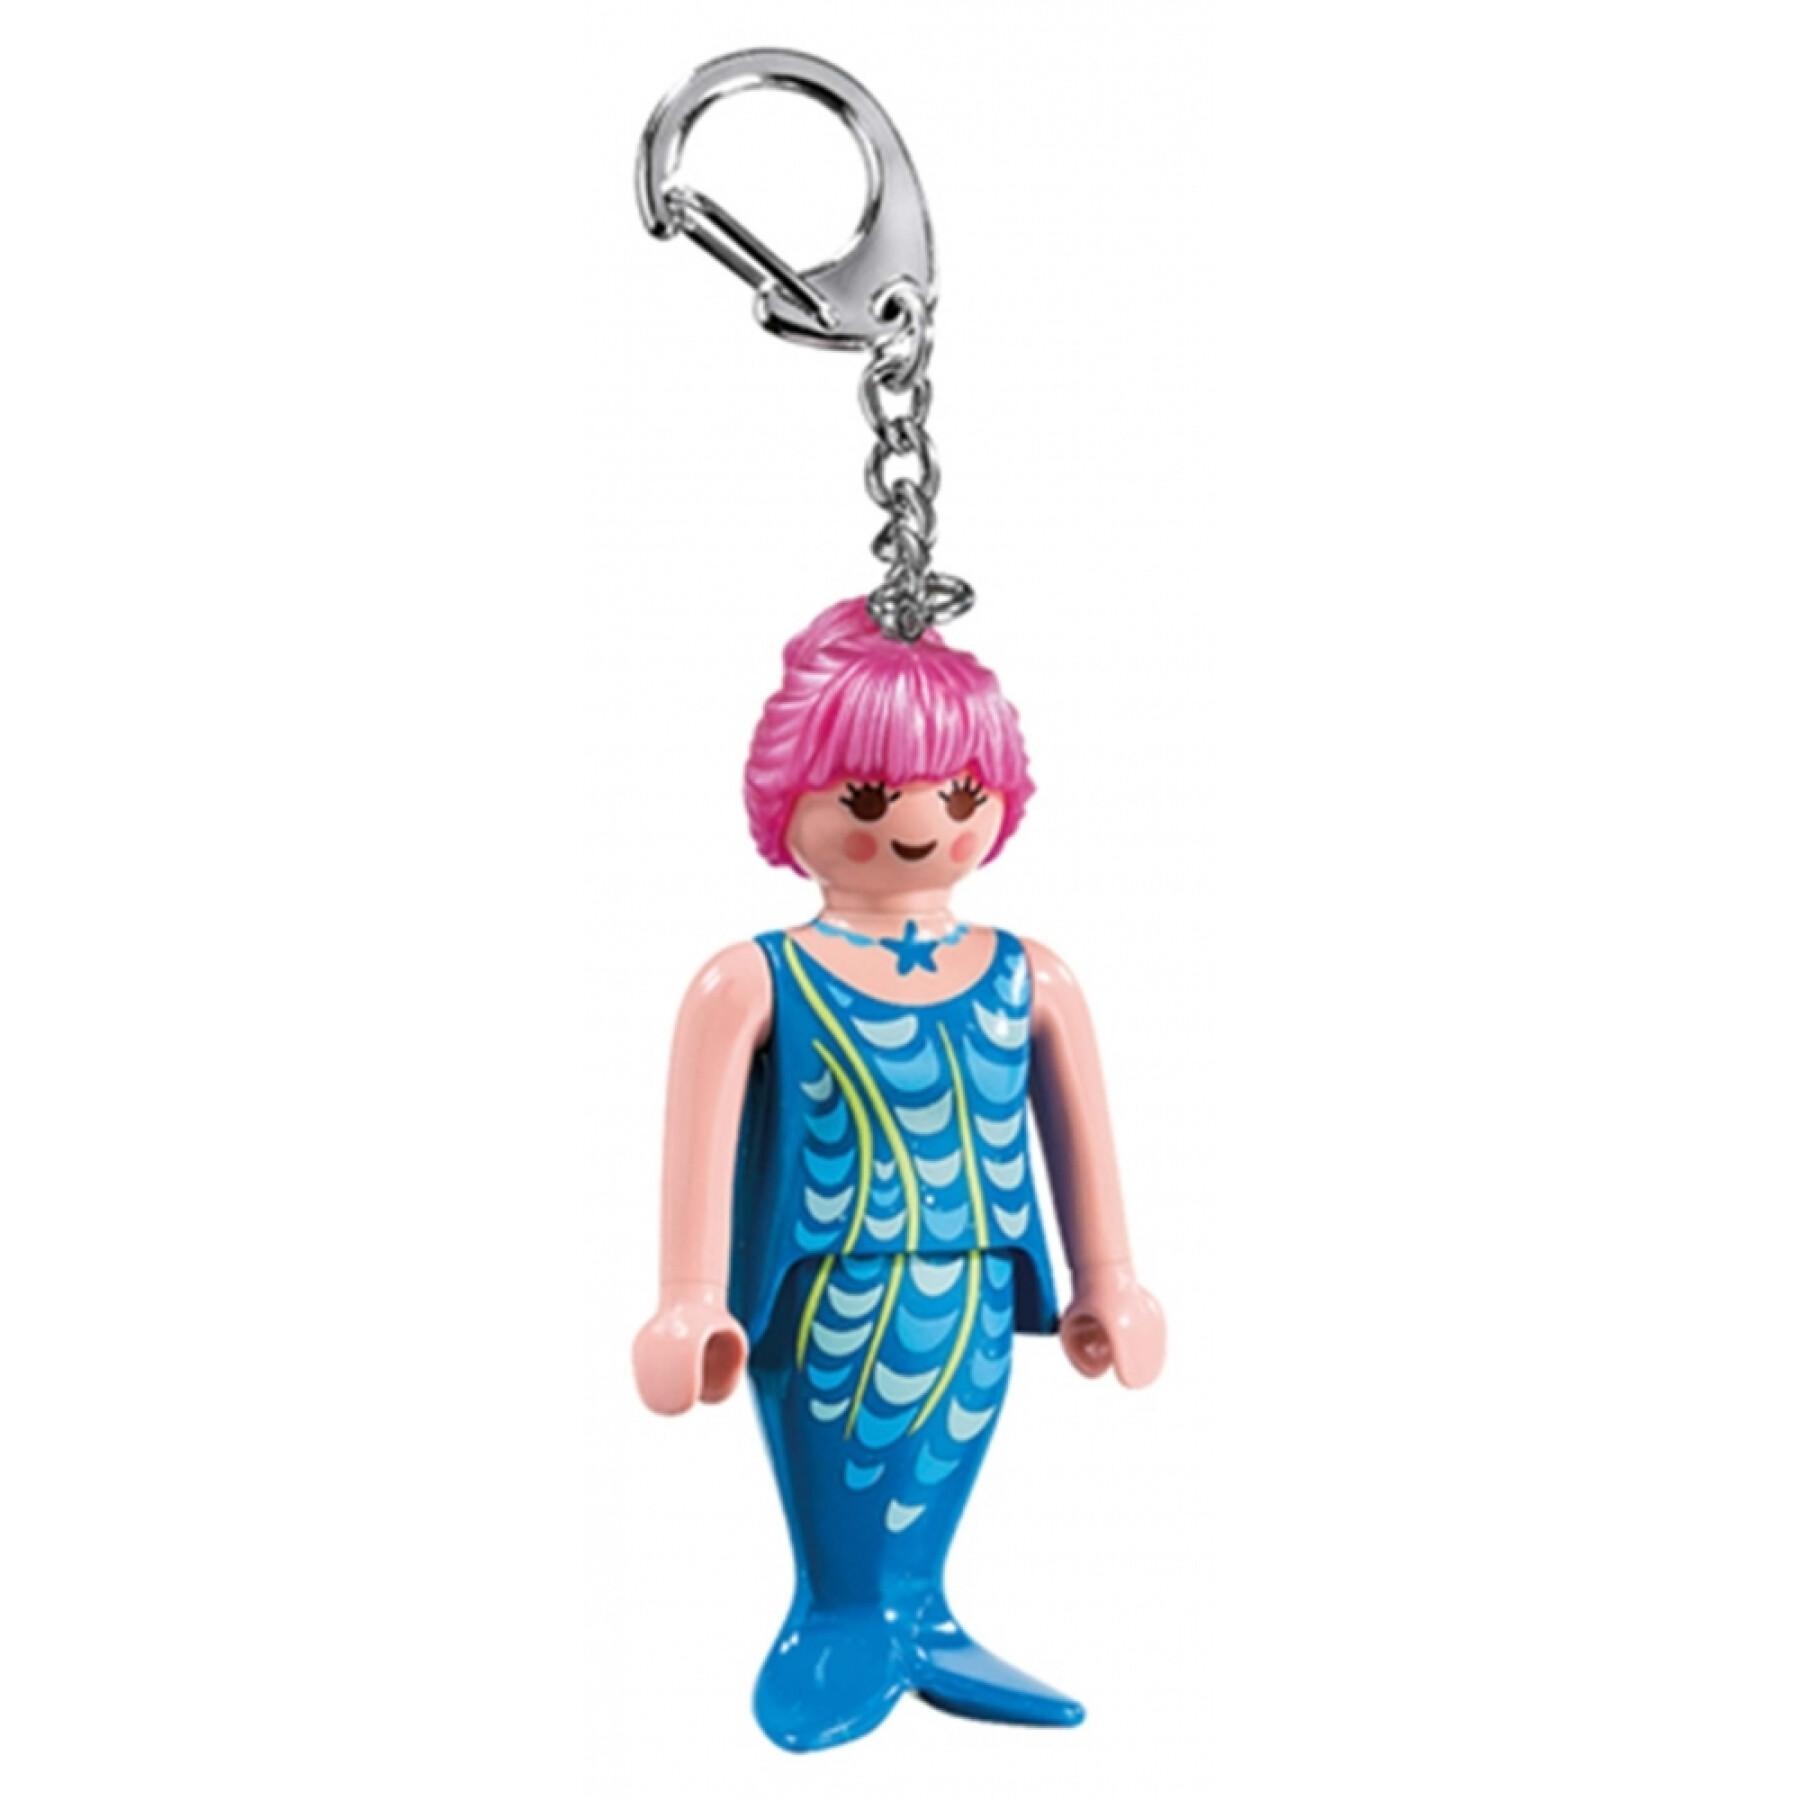 Mermaid keychain Playmobil